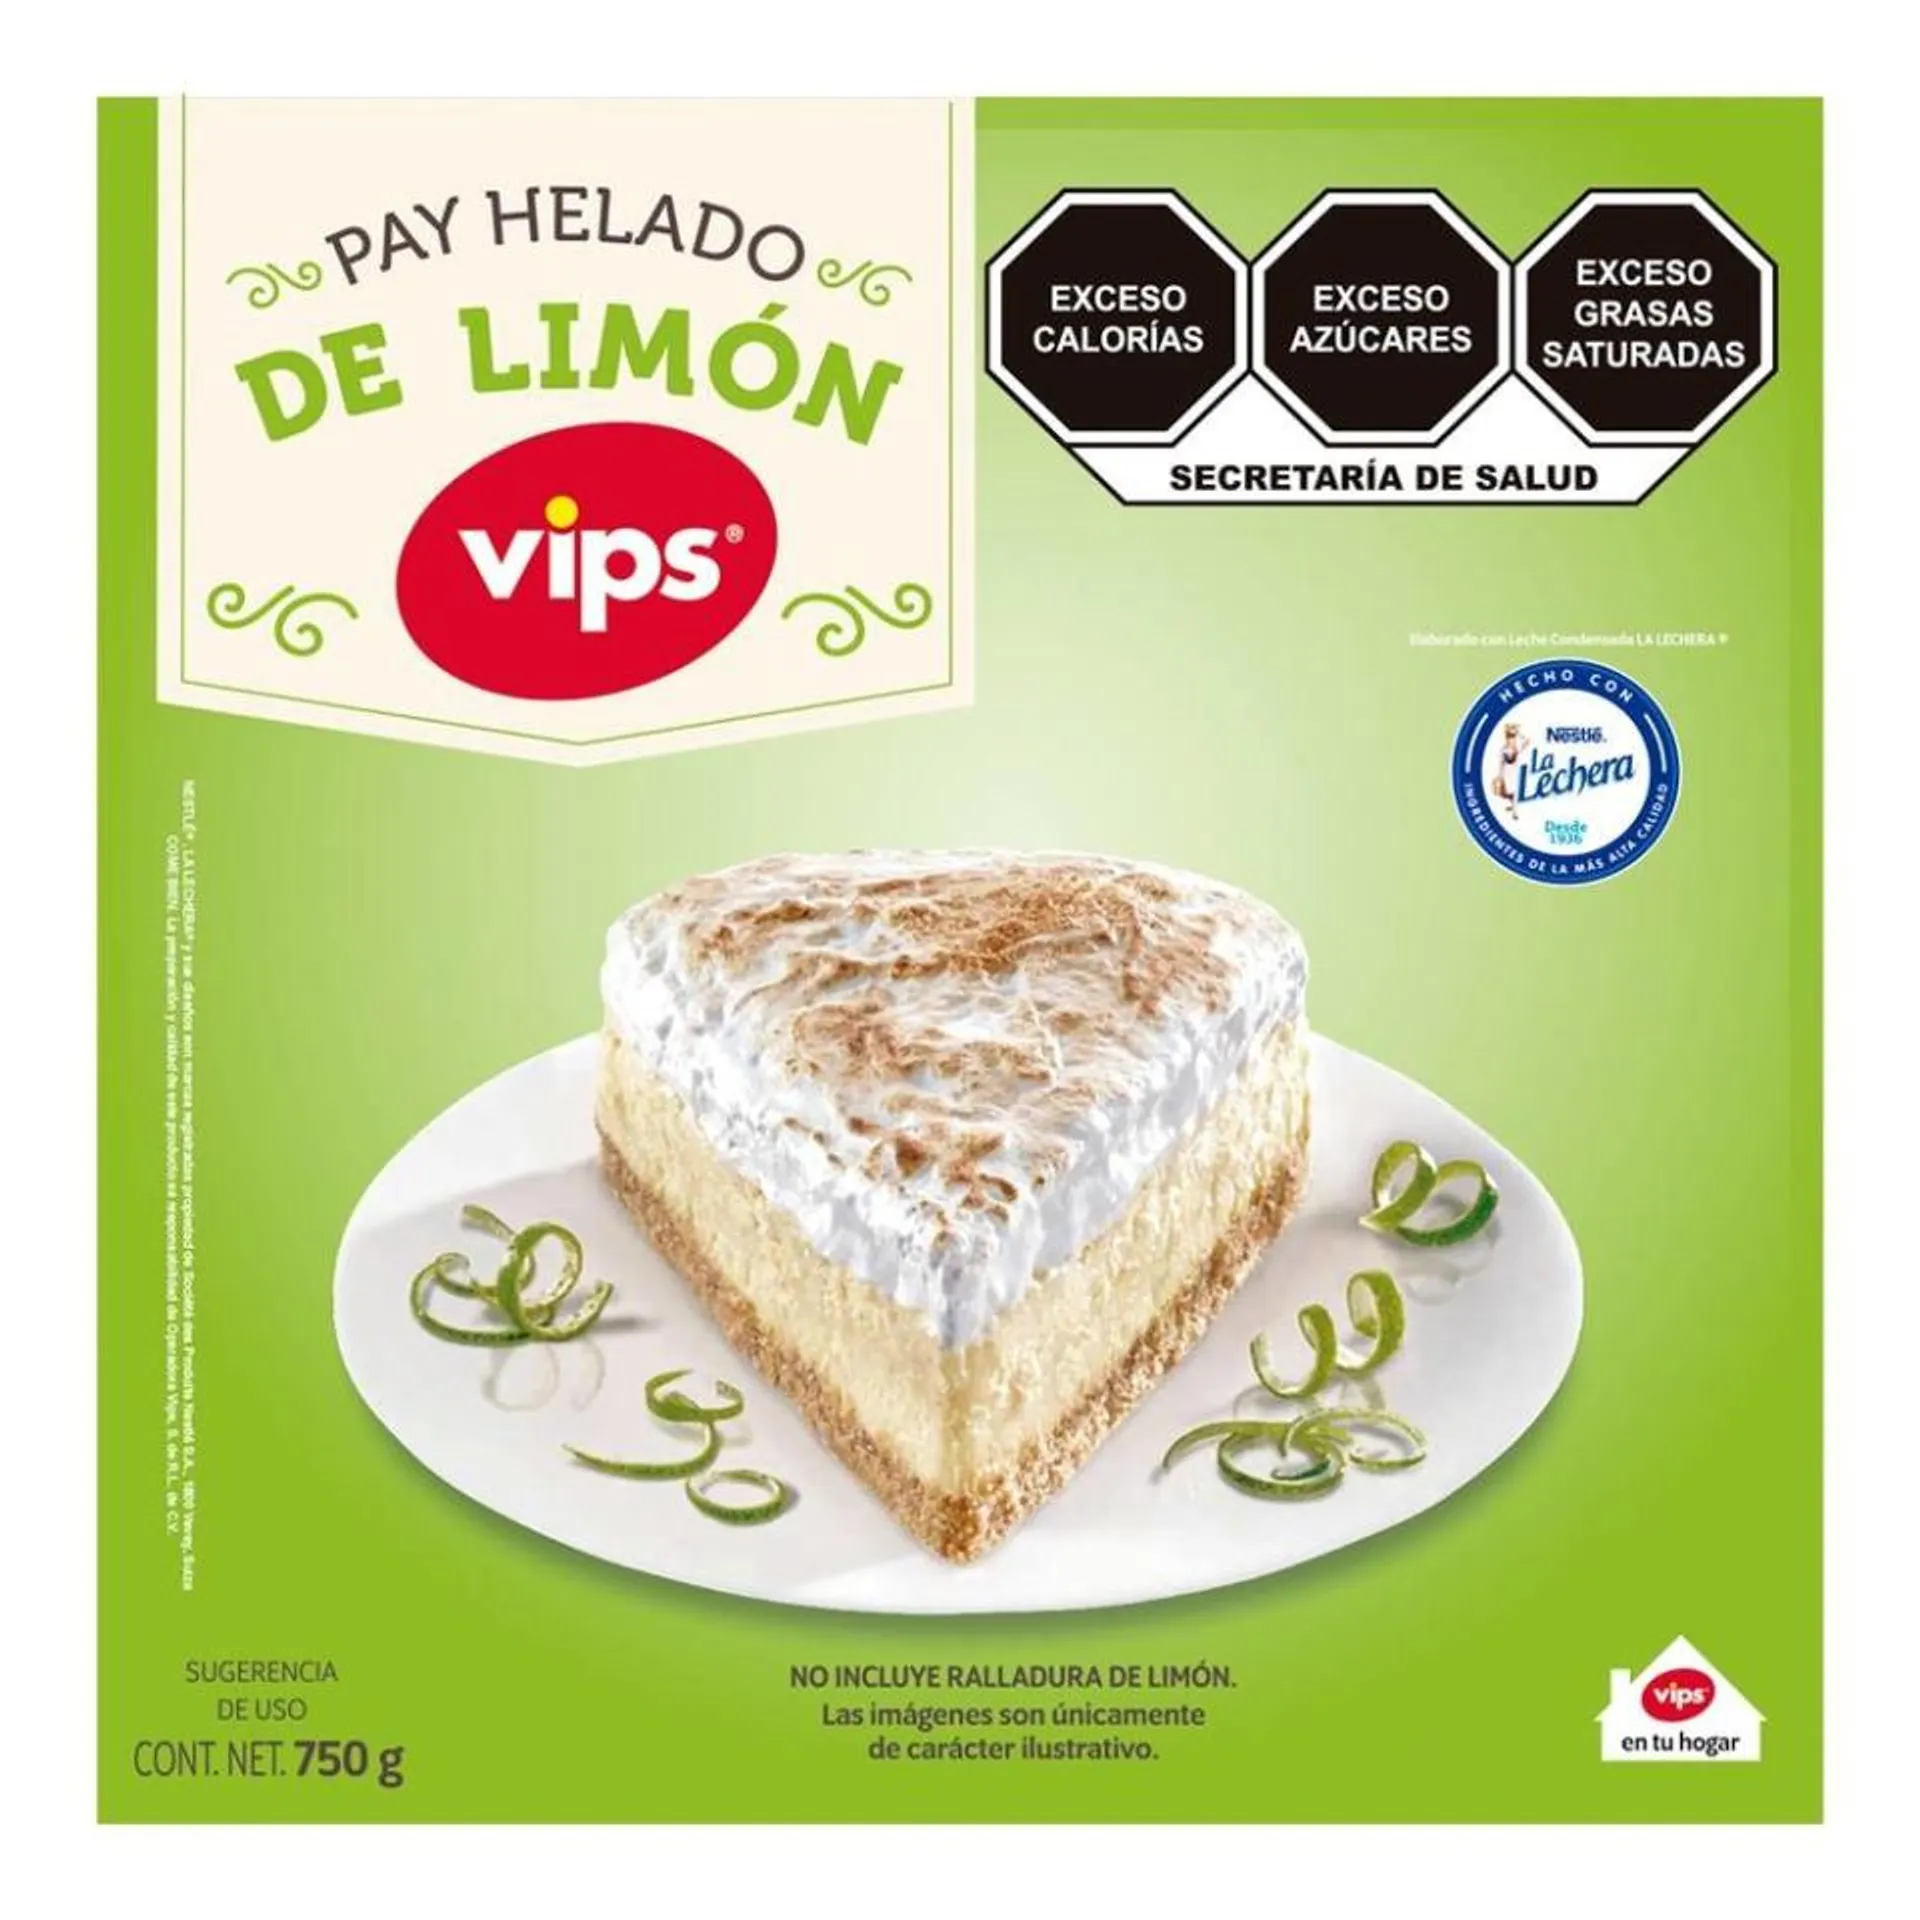 Pay helado Vips La Lechera de limón 750 g